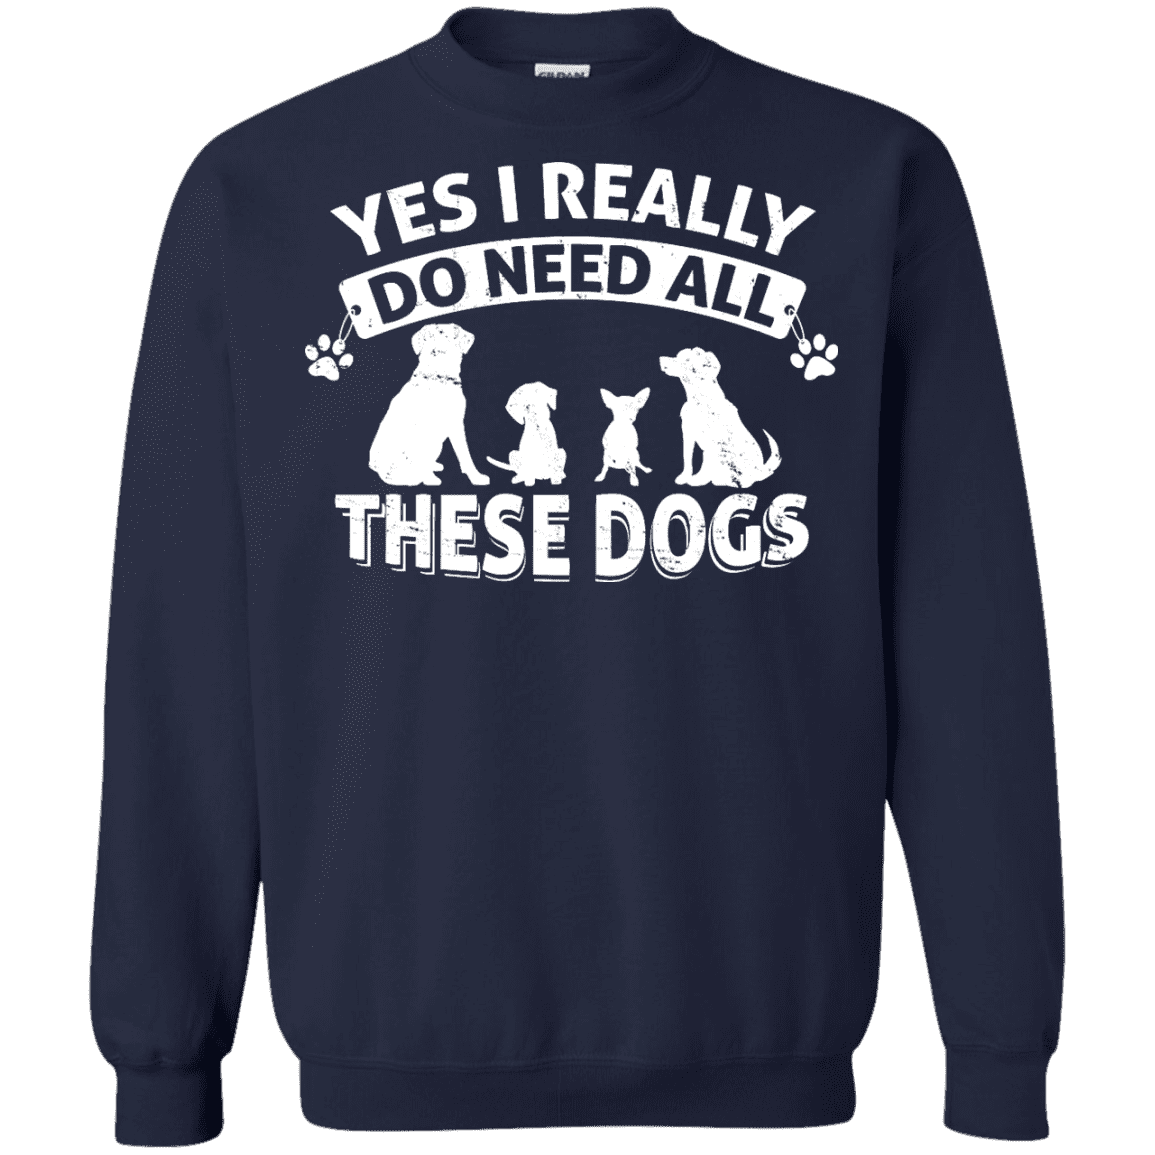 Yes I Need All These Dogs - Sweatshirt.